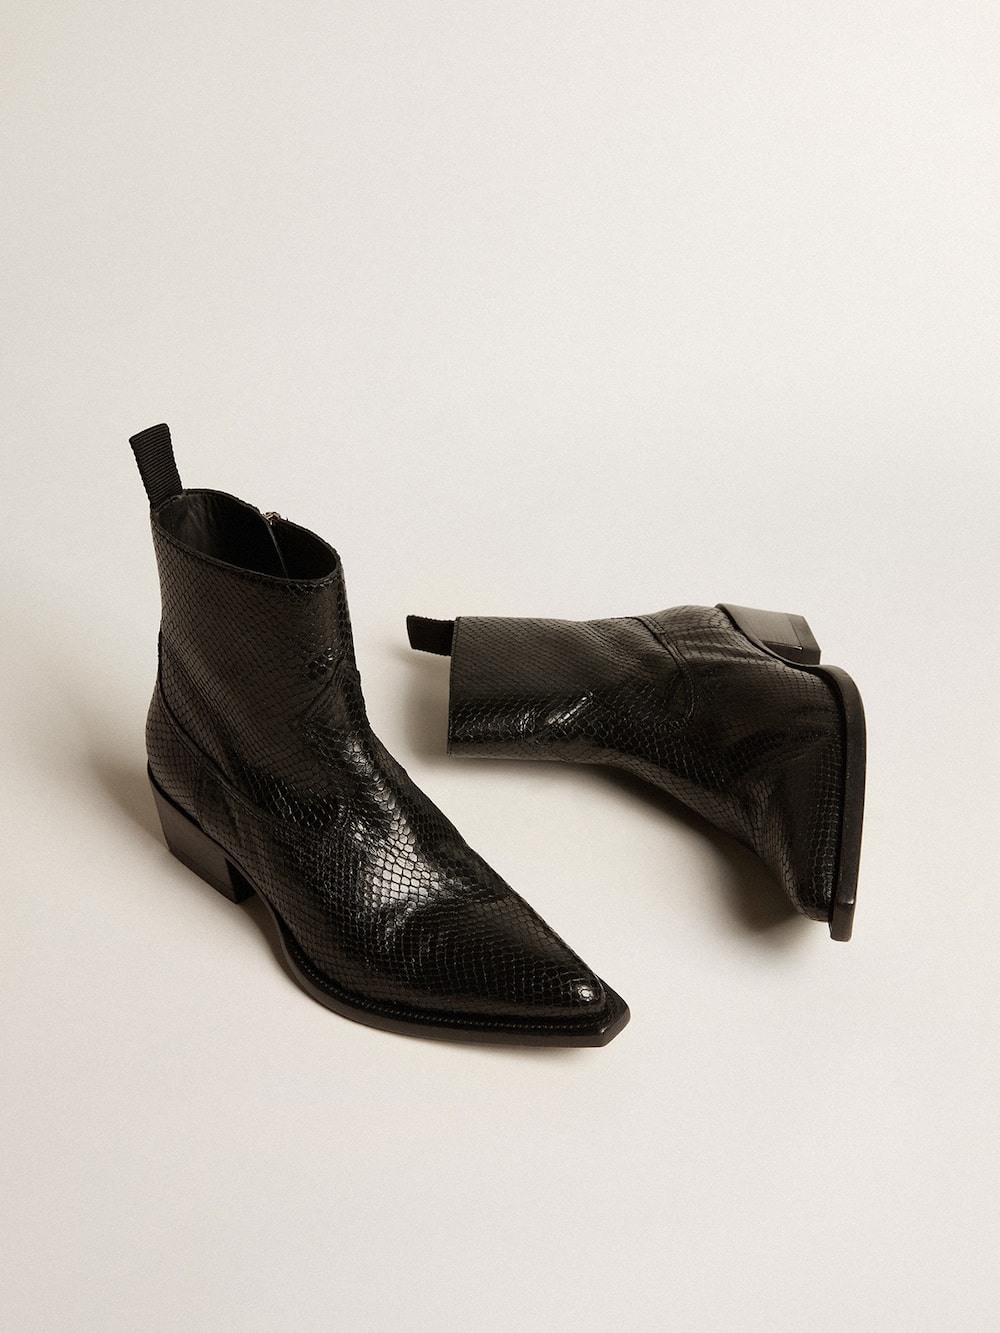 Golden Goose - Low Debbie boots in black snake-print leather in 